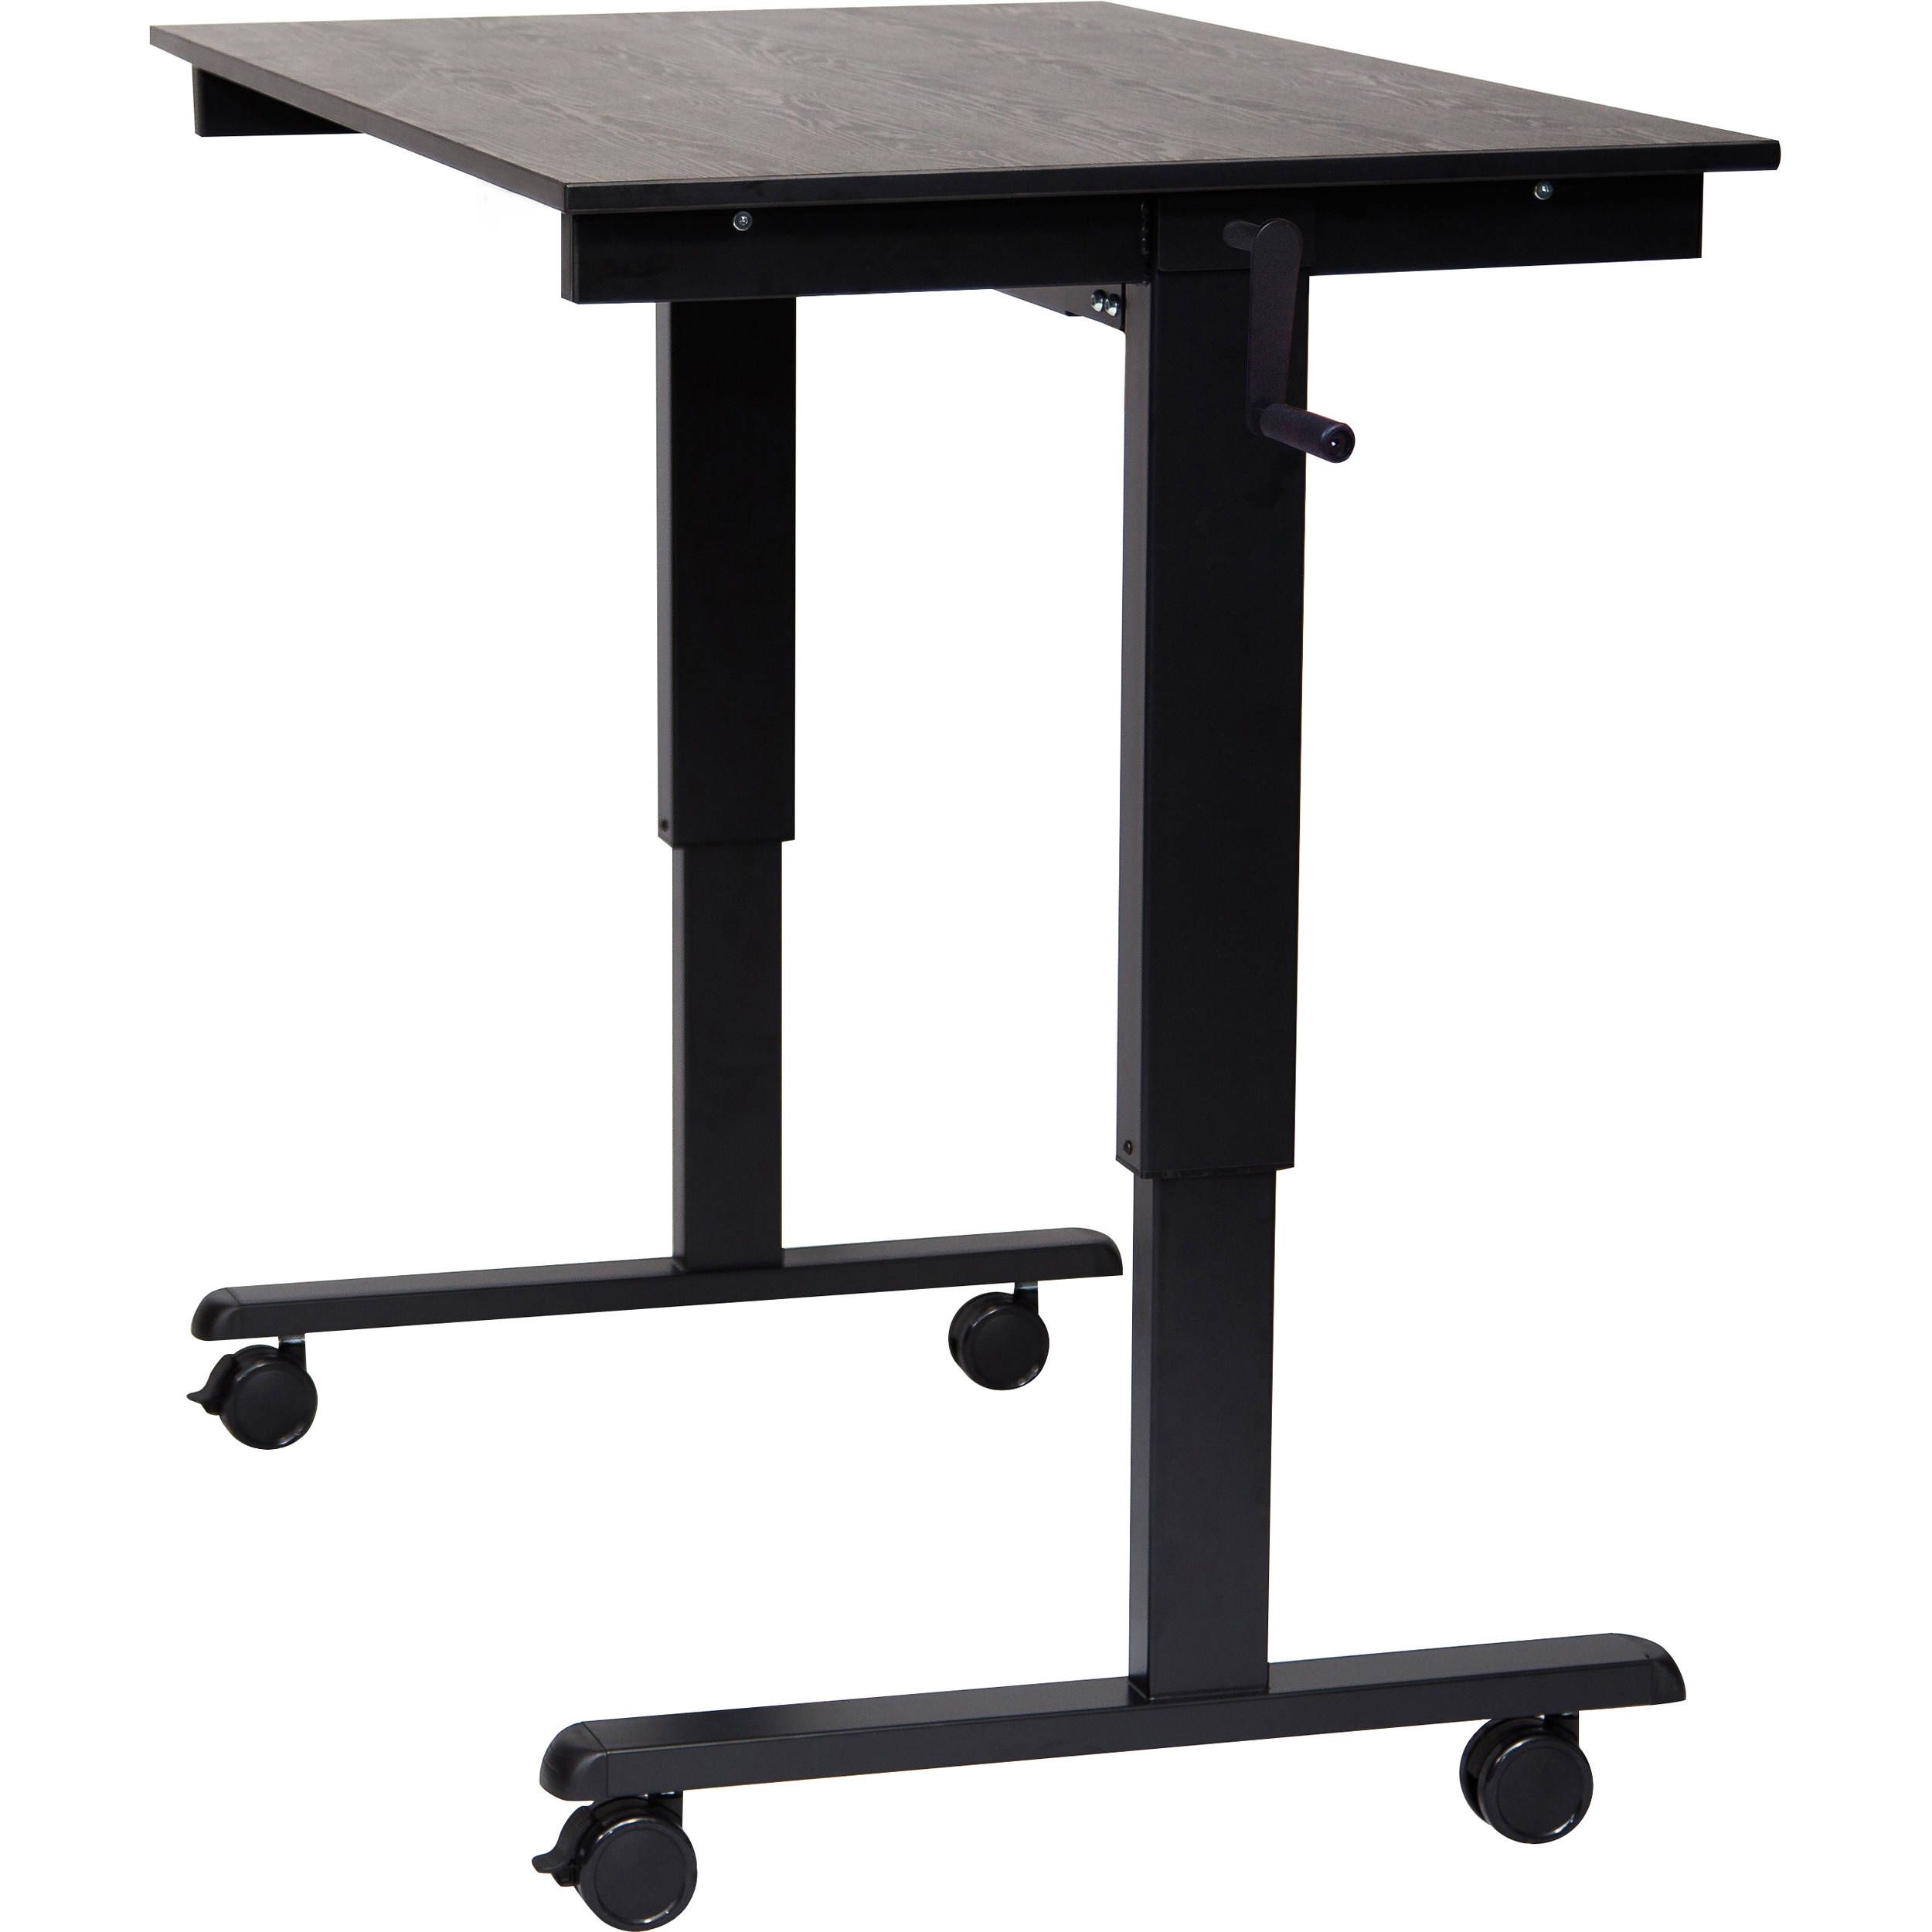 Luxor 48" Crank Adjustable Stand Up Desk Standcf48 Bk/bo B&h Regarding Cherry Adjustable Stand Up Desks (View 11 of 15)